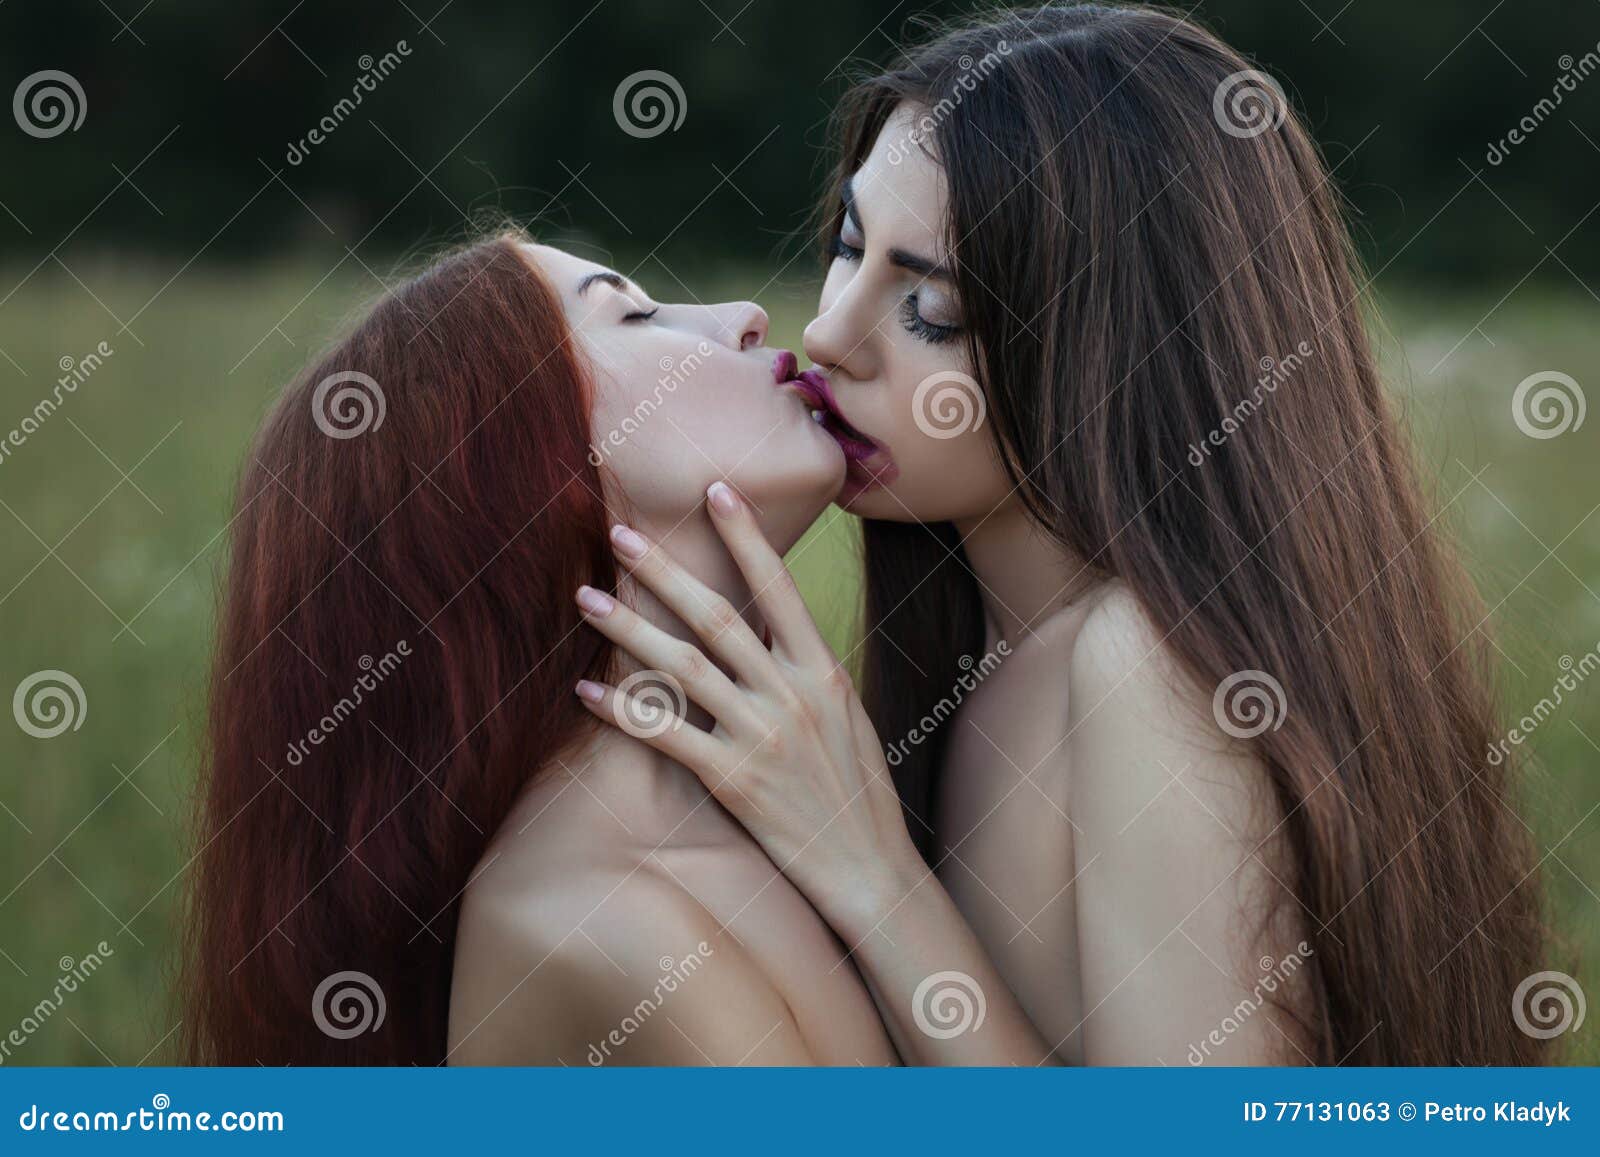 Kissing nude lesbian